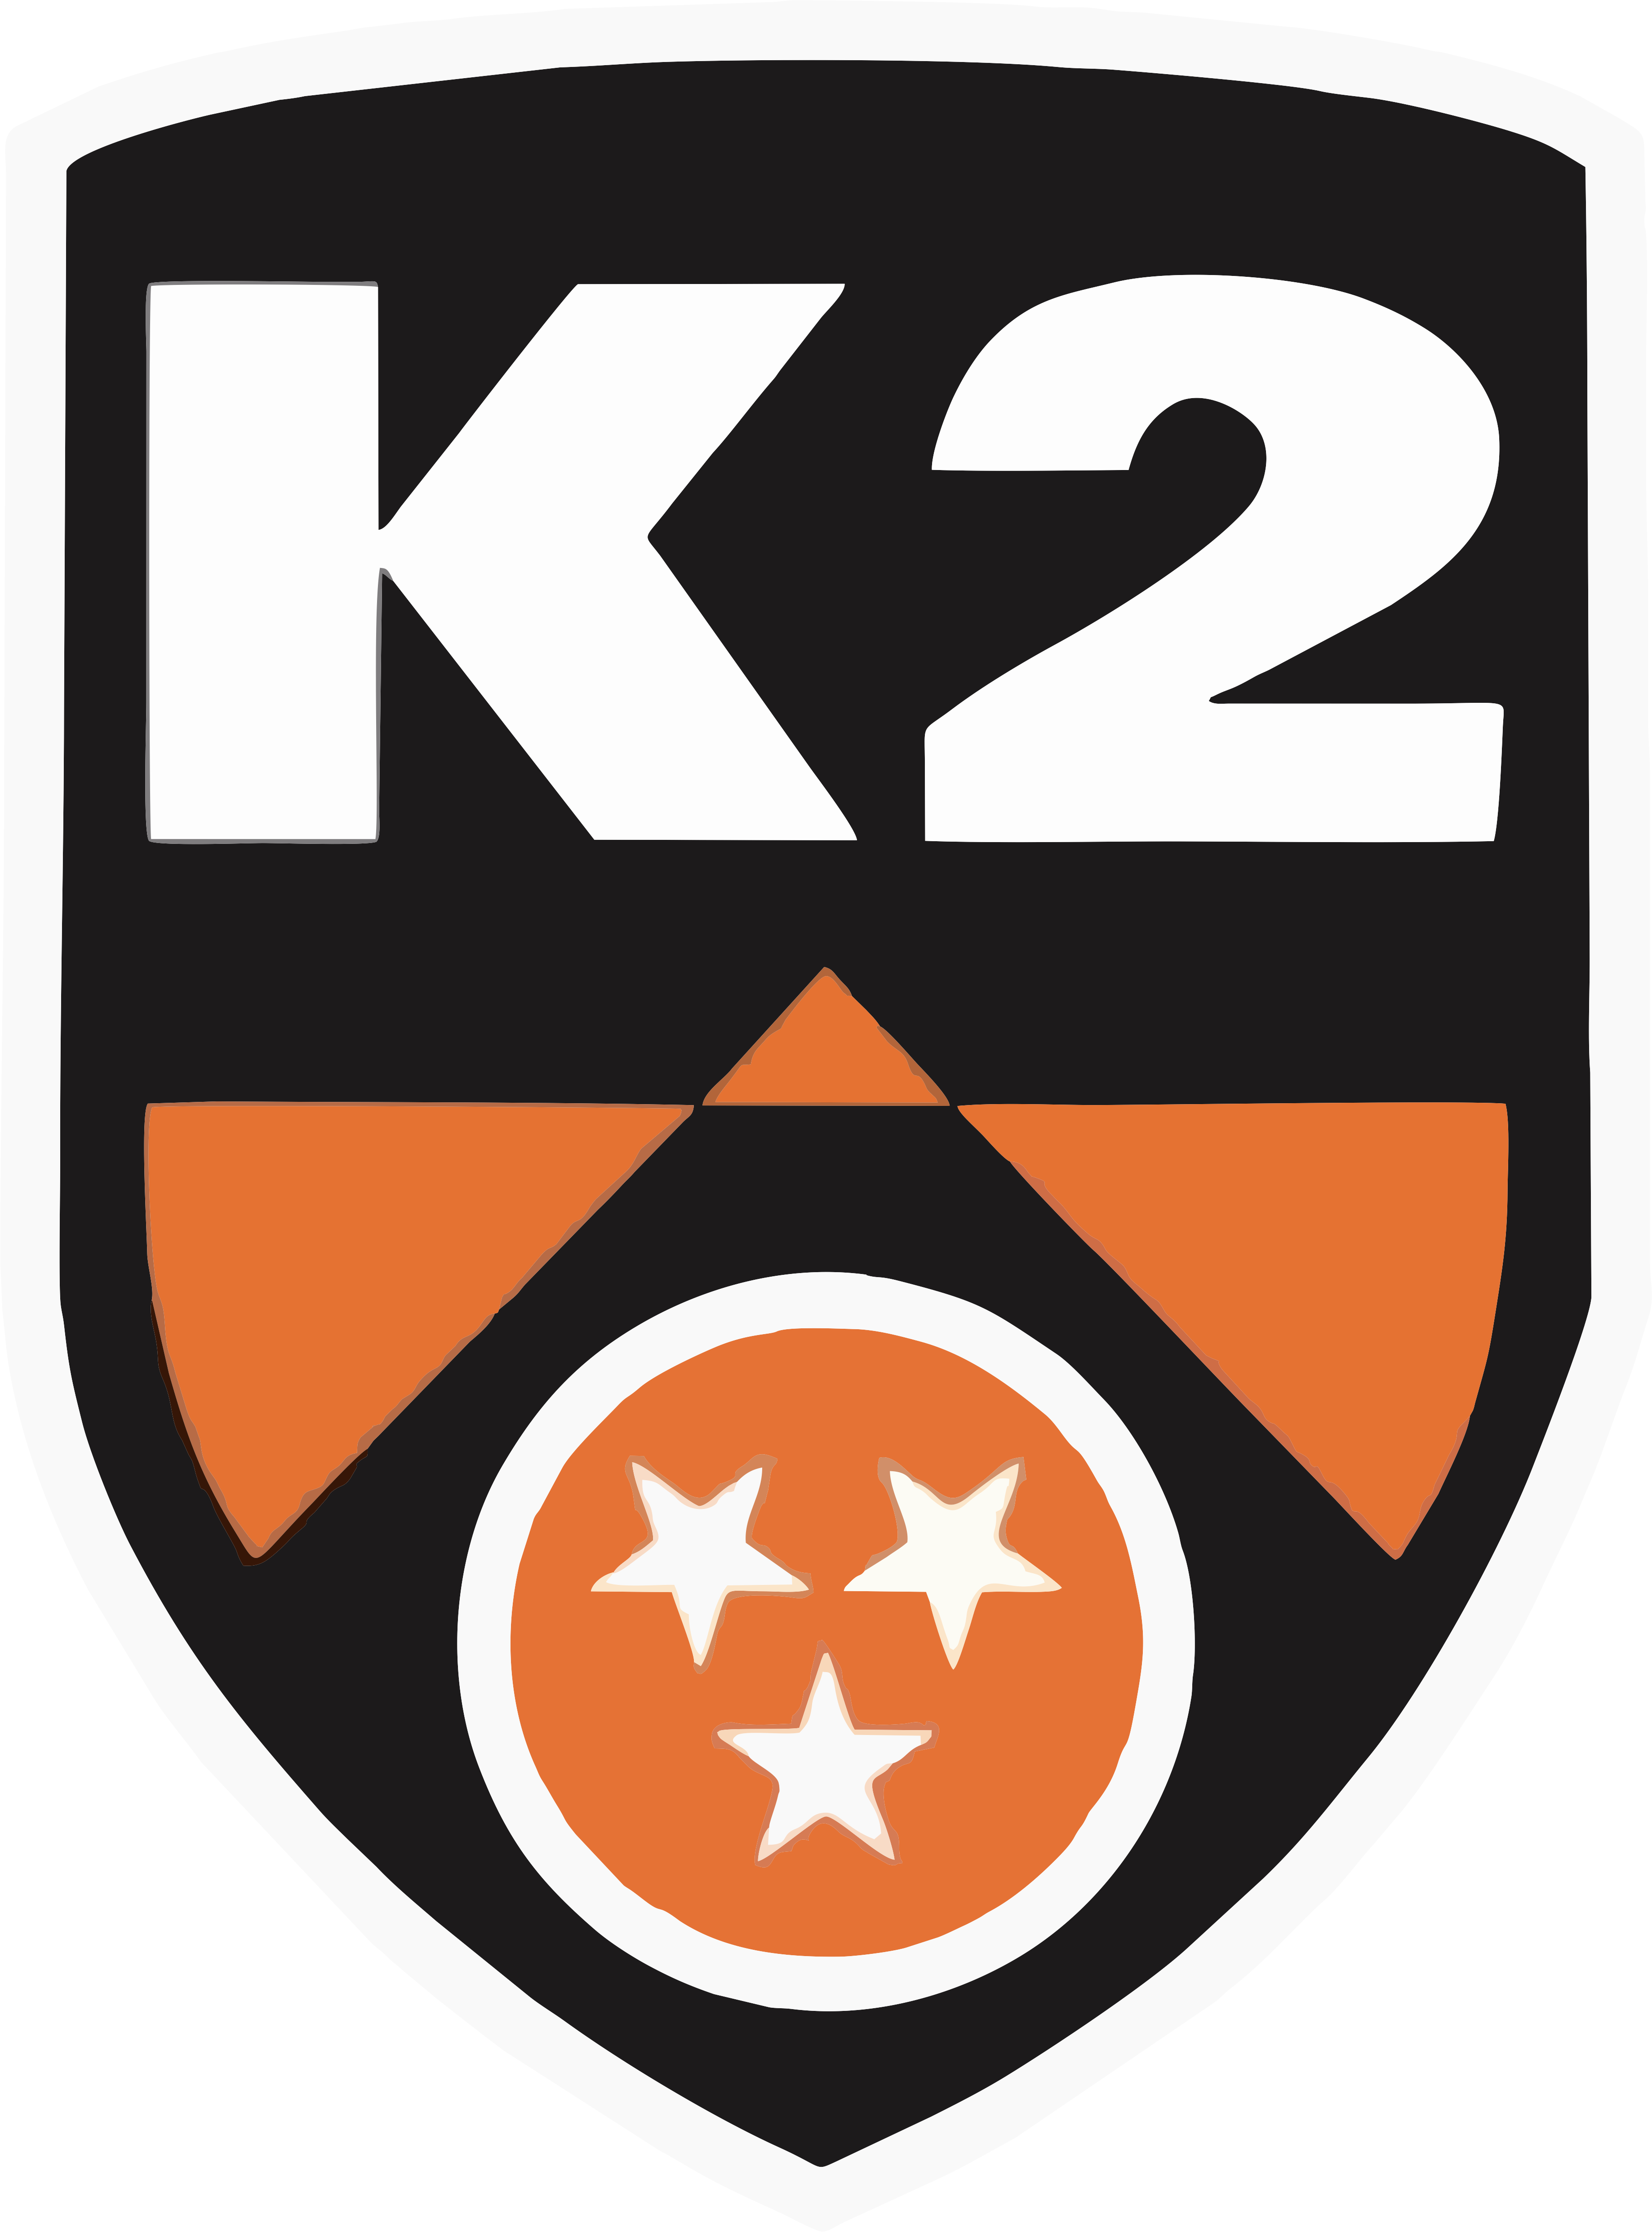 K2 Volleyball